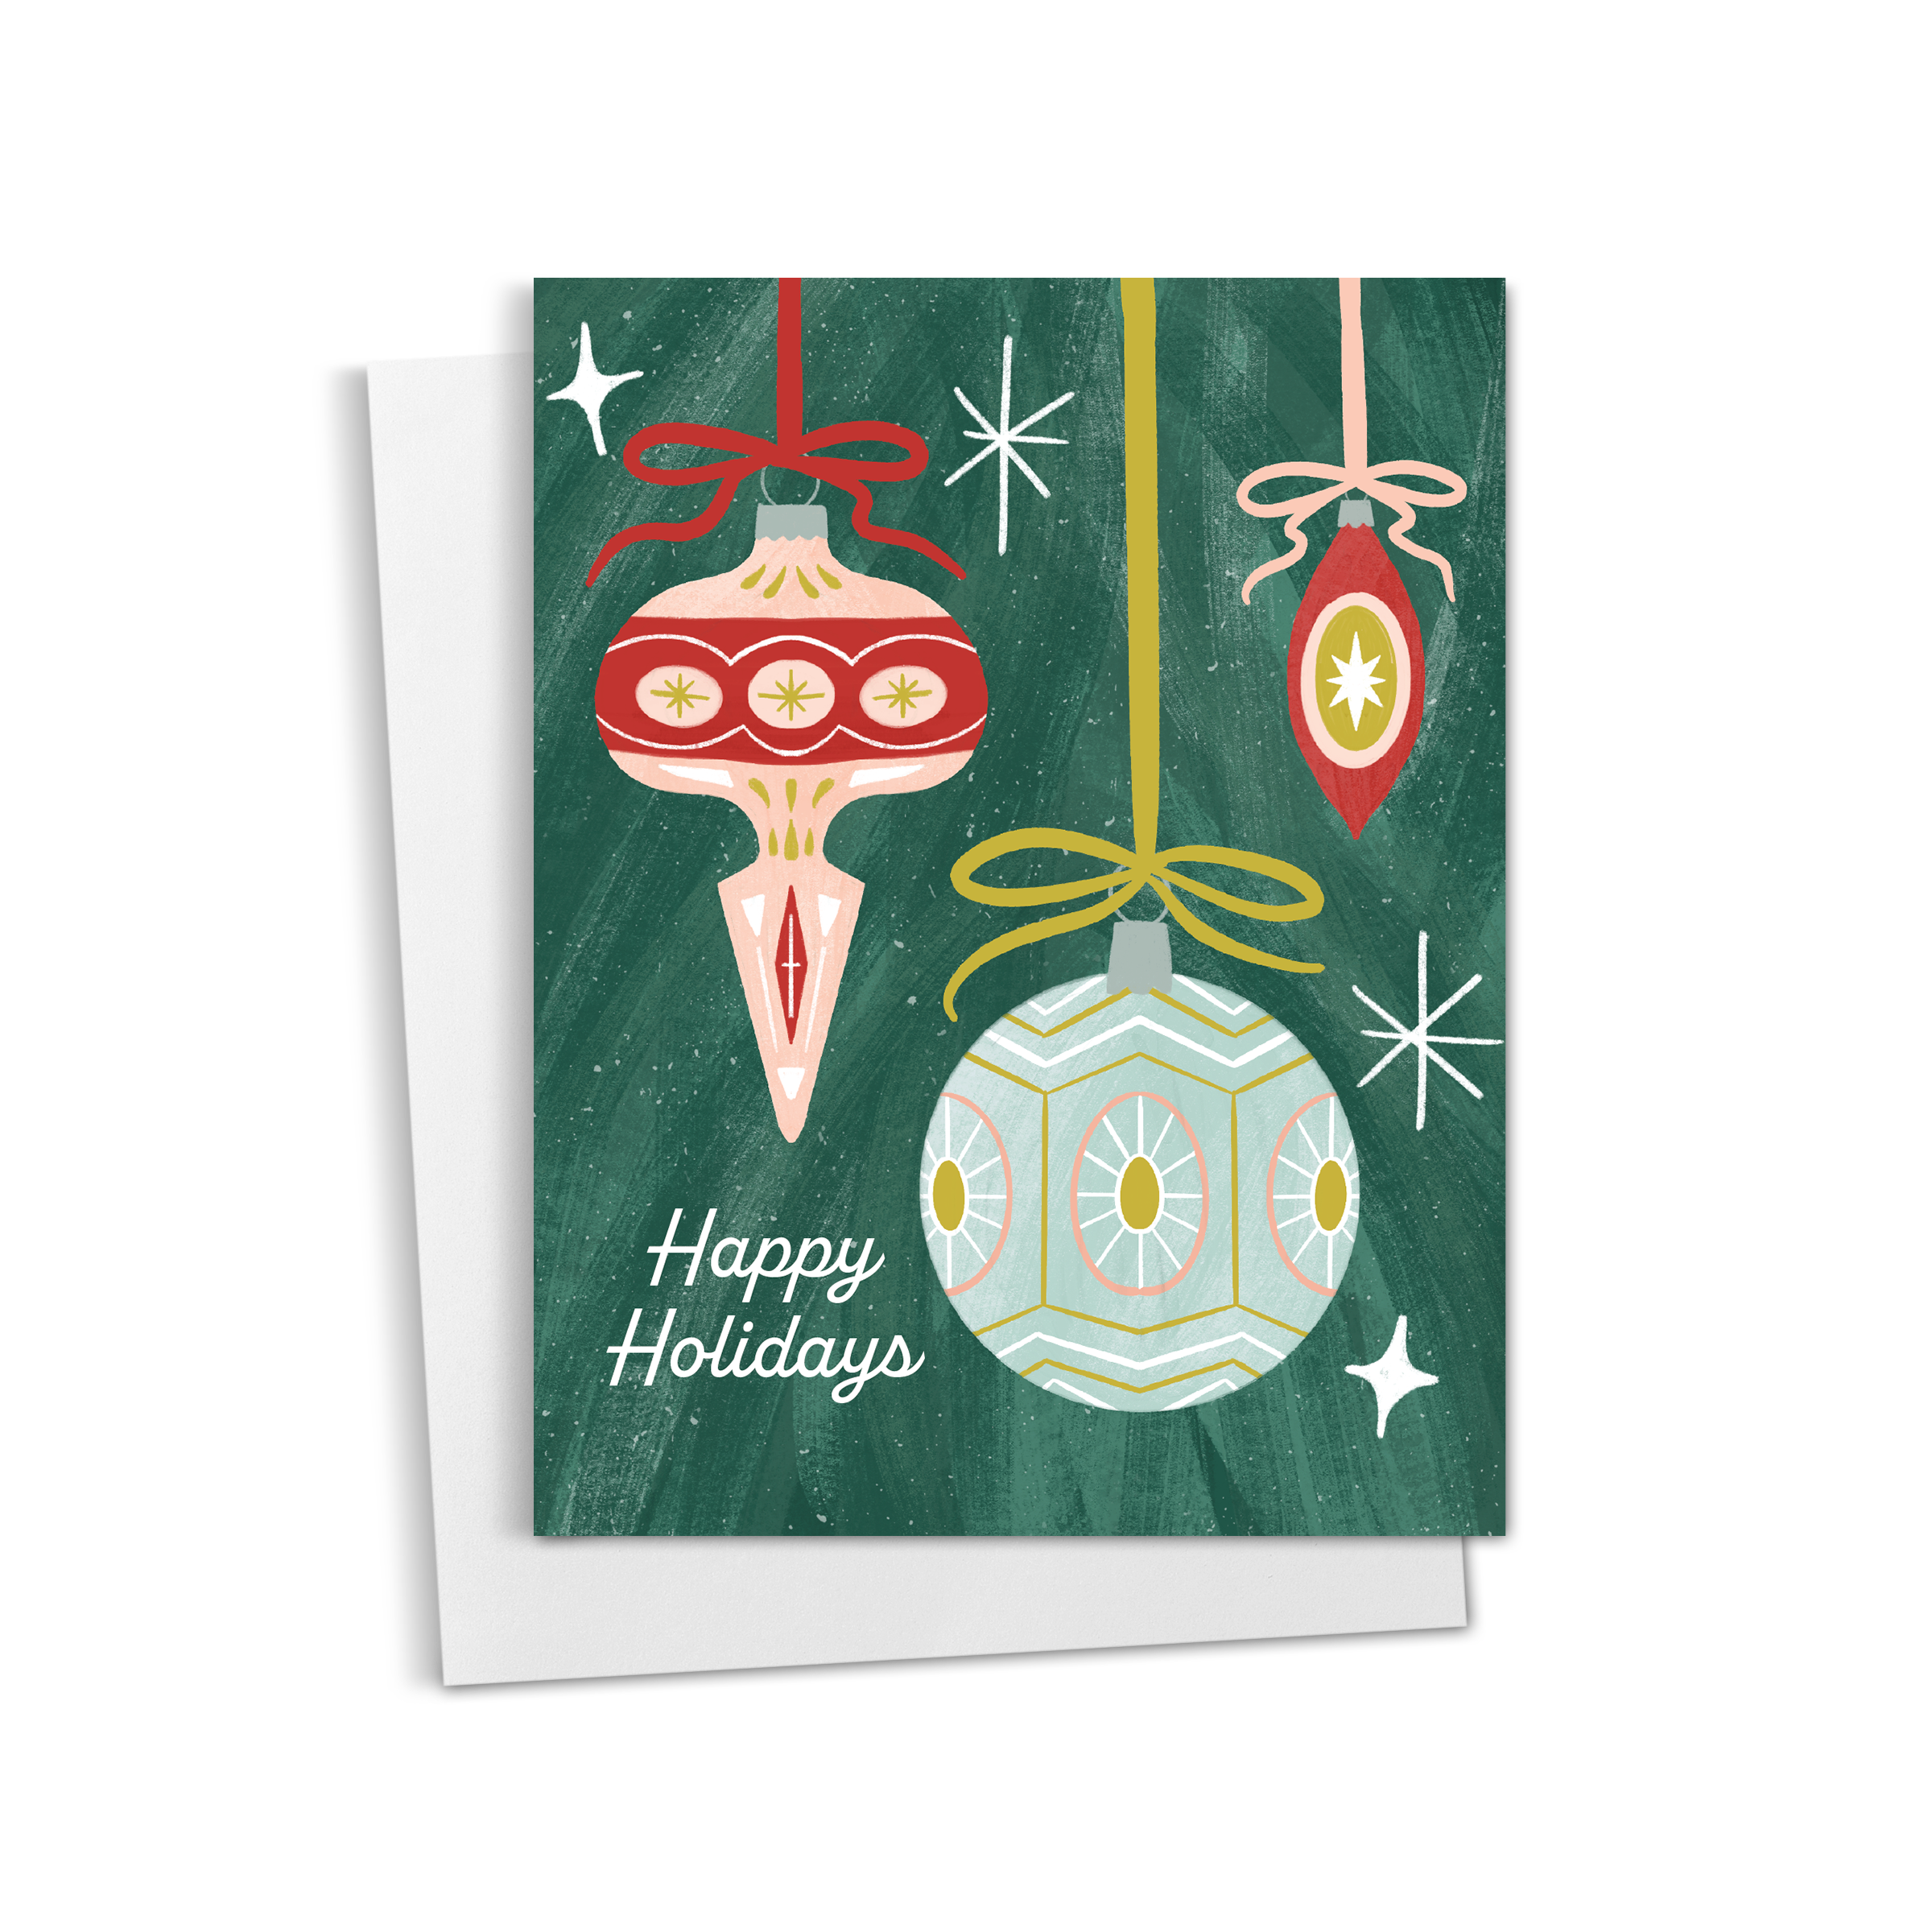 Retro Ornaments Holiday Card